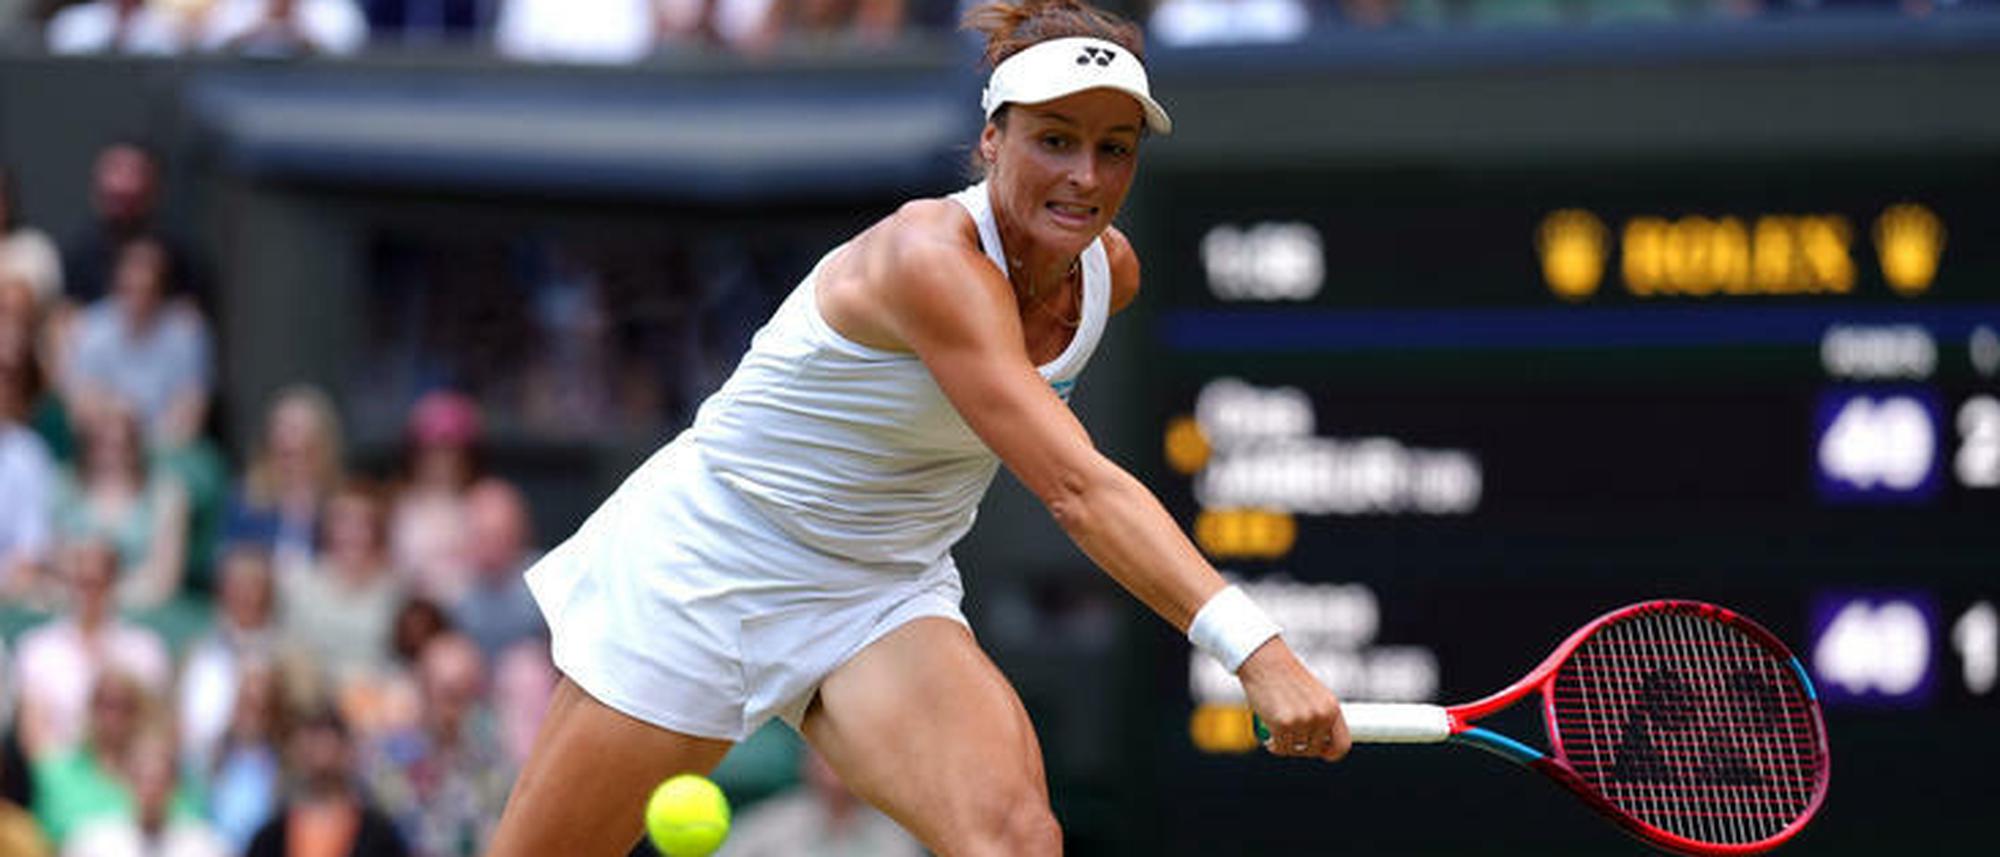 Drei-Satz-Niederlage gegen Ons Jabeur Tatjana Maria verpasst Wimbledon-Finale